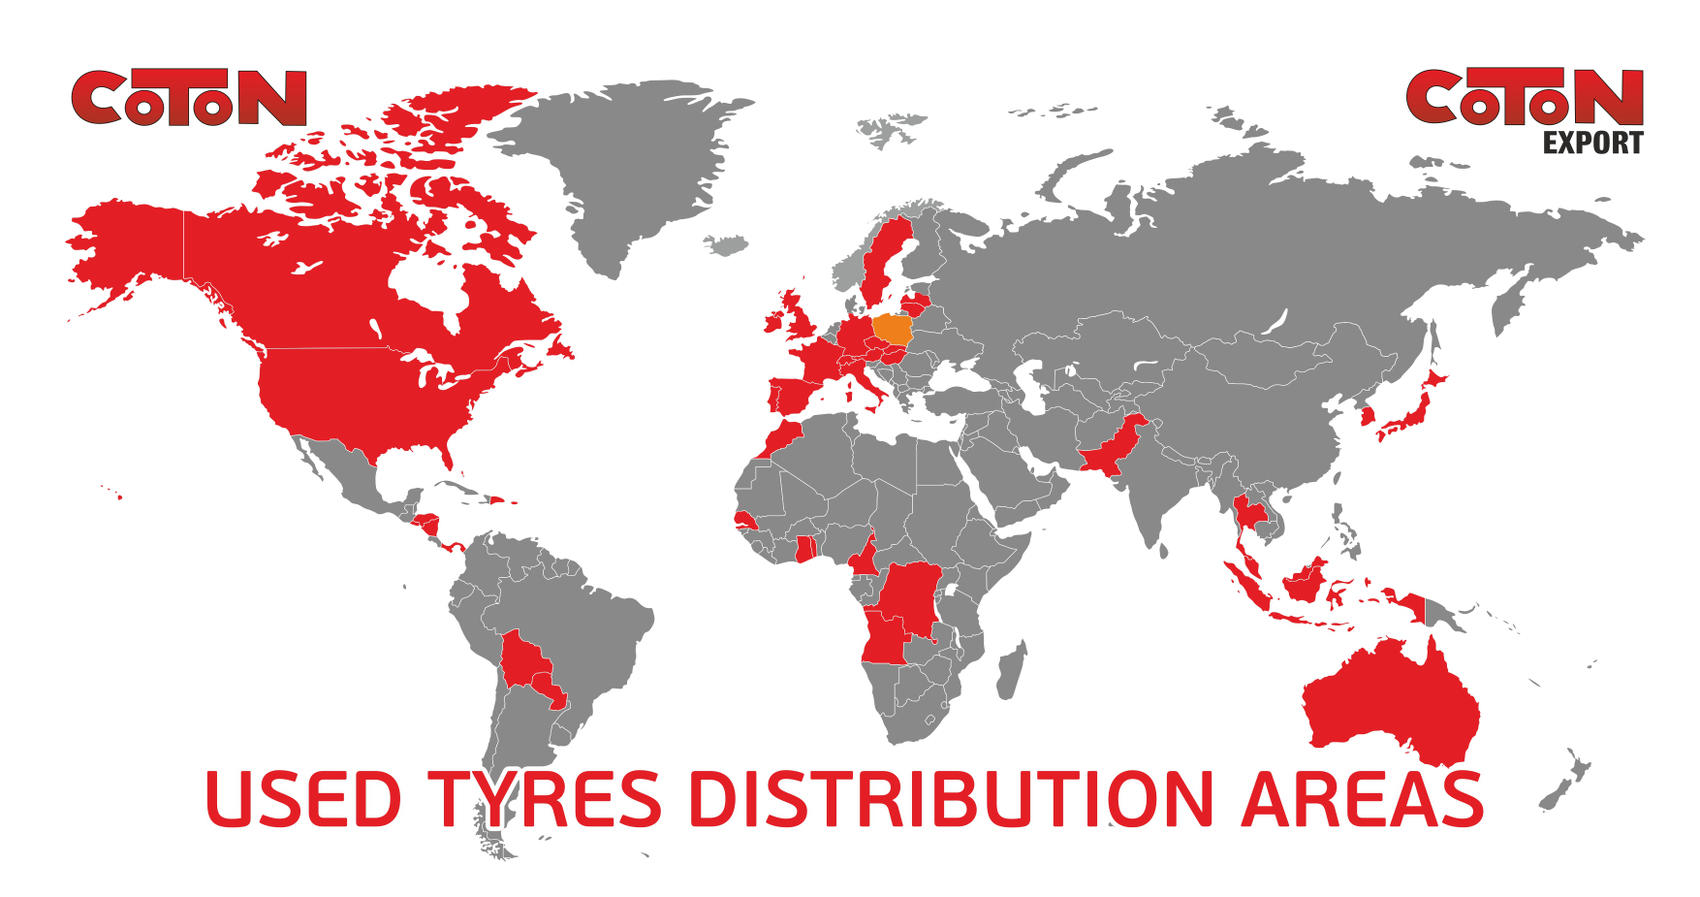 Coton used tyres distribution areas